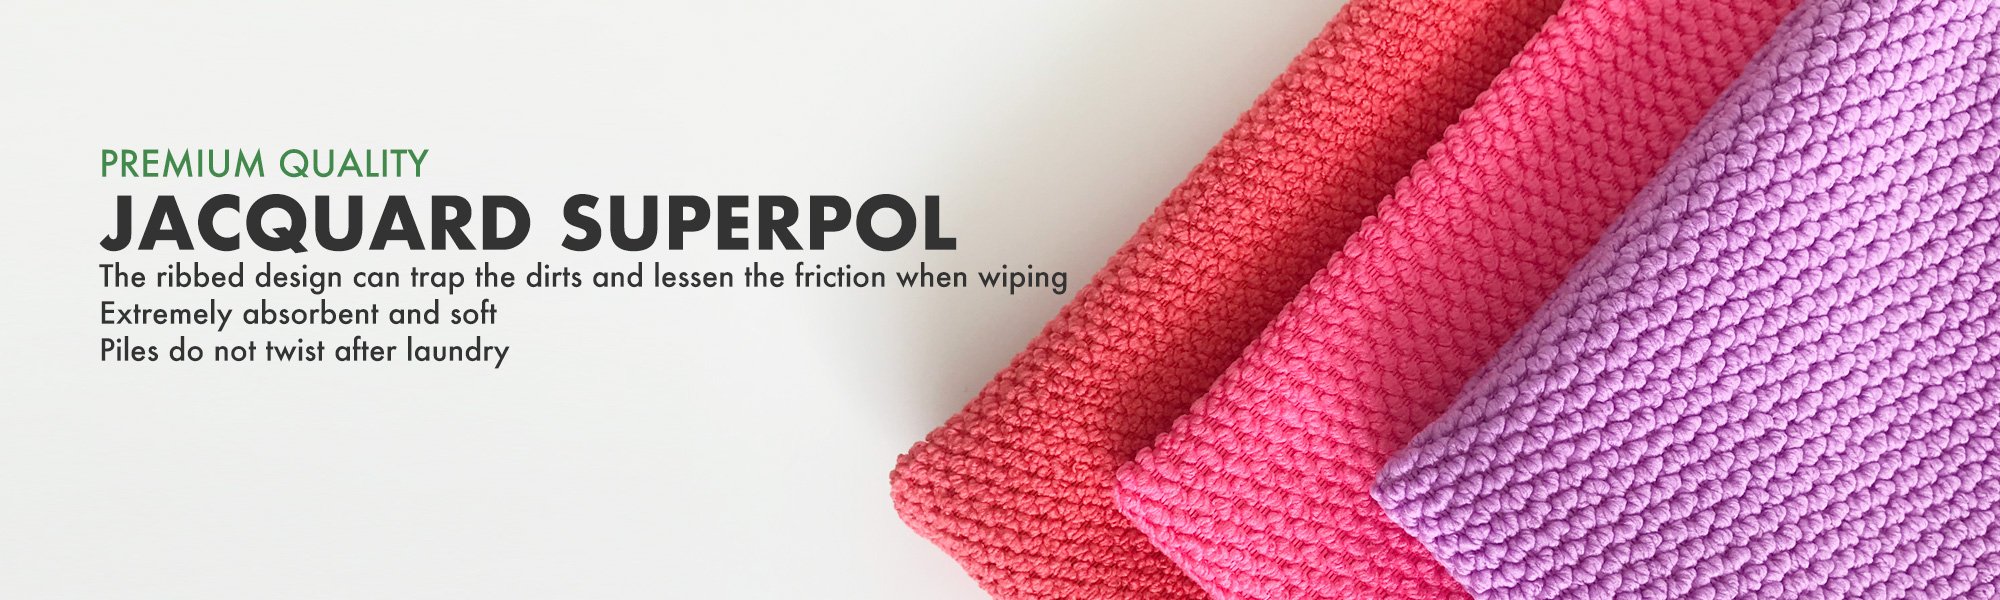 Jacquard Superpol Mifcrofiber Towel